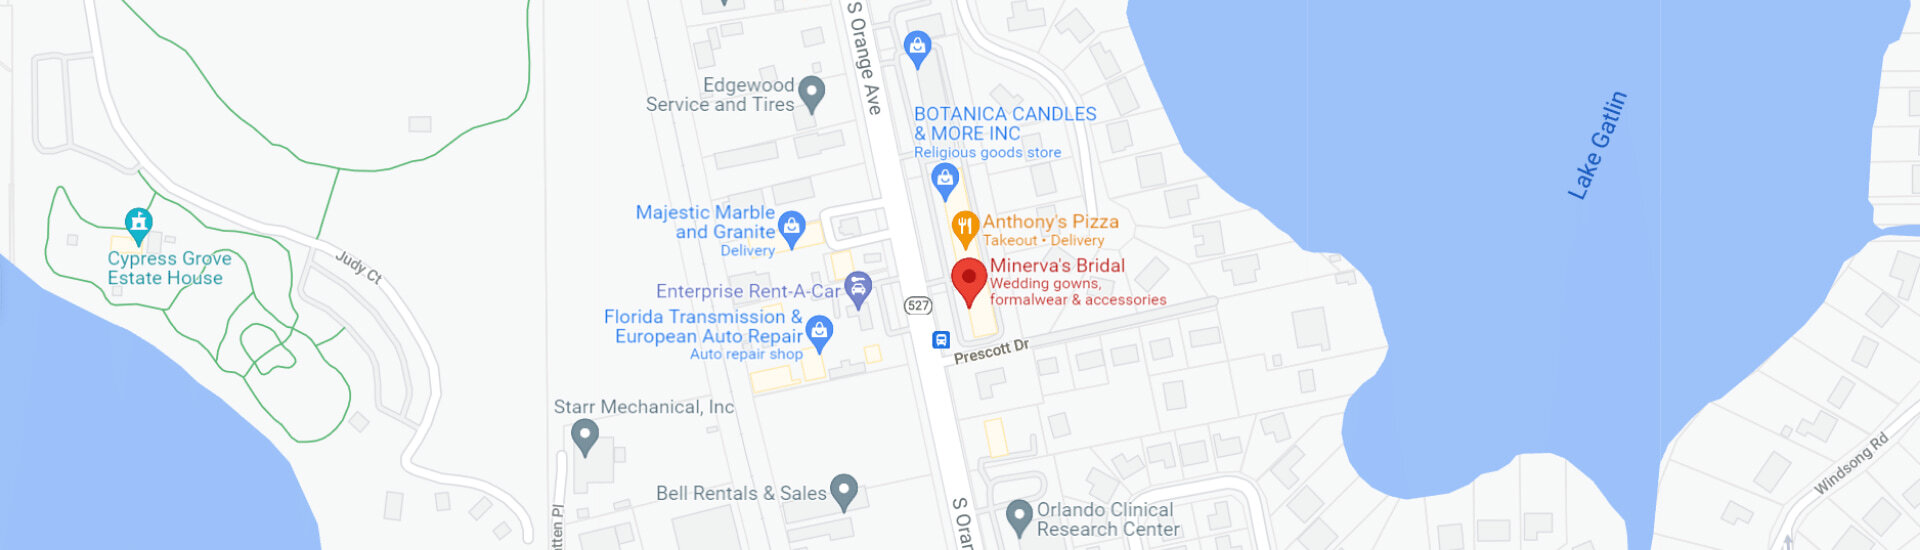 Minerva's Bridal Orlando location